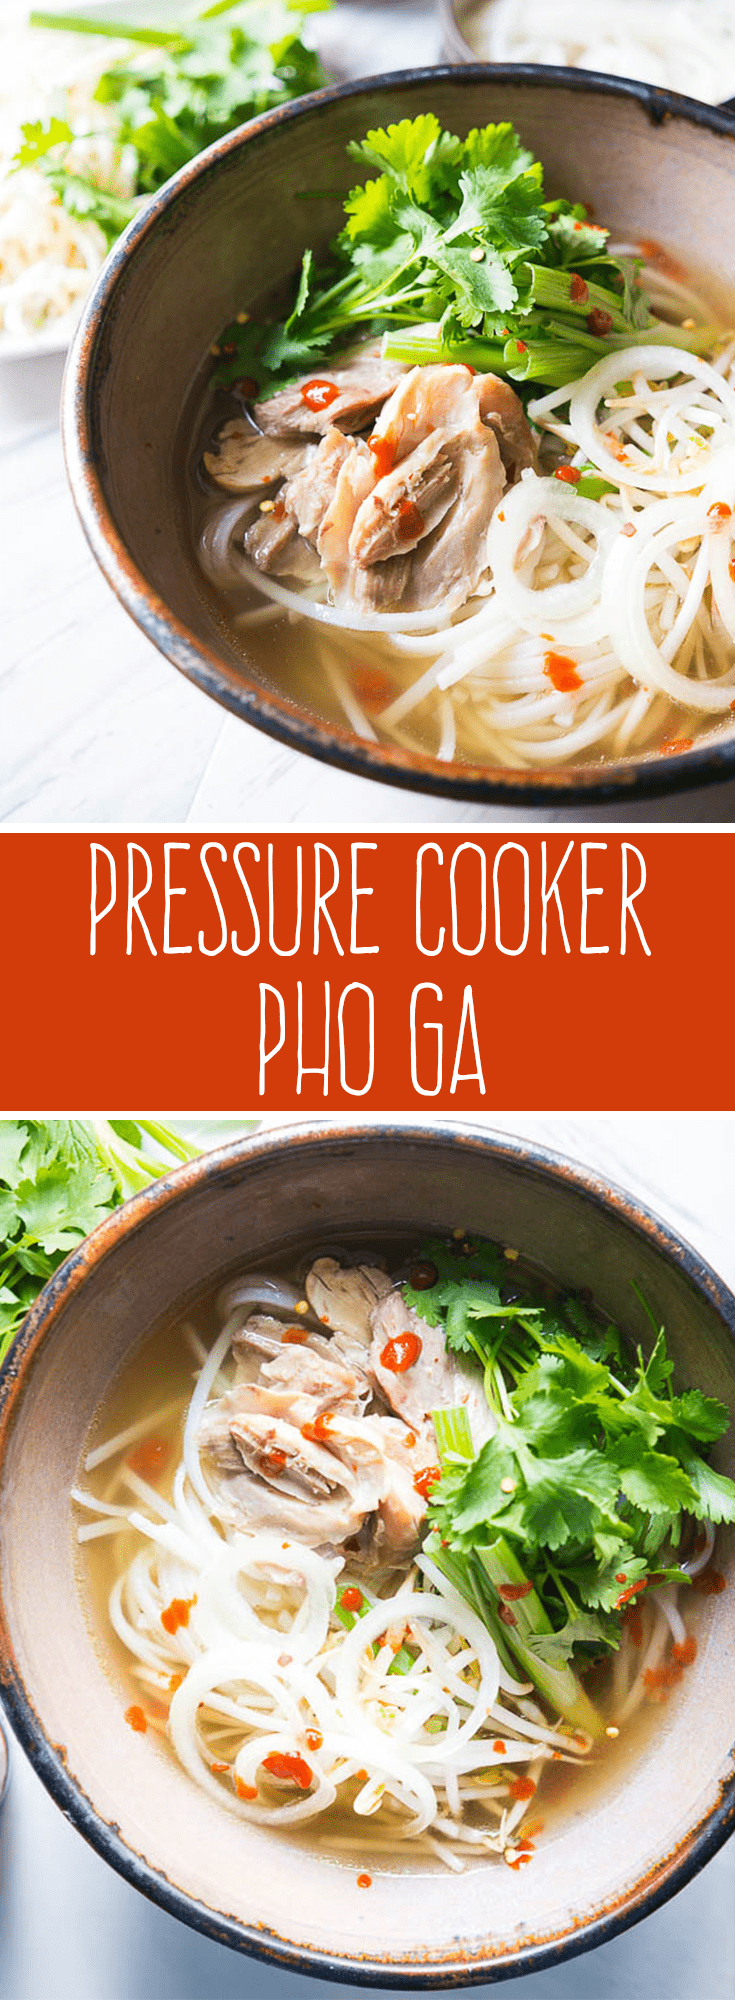 Pressure Cooker Pho Ga photo collage